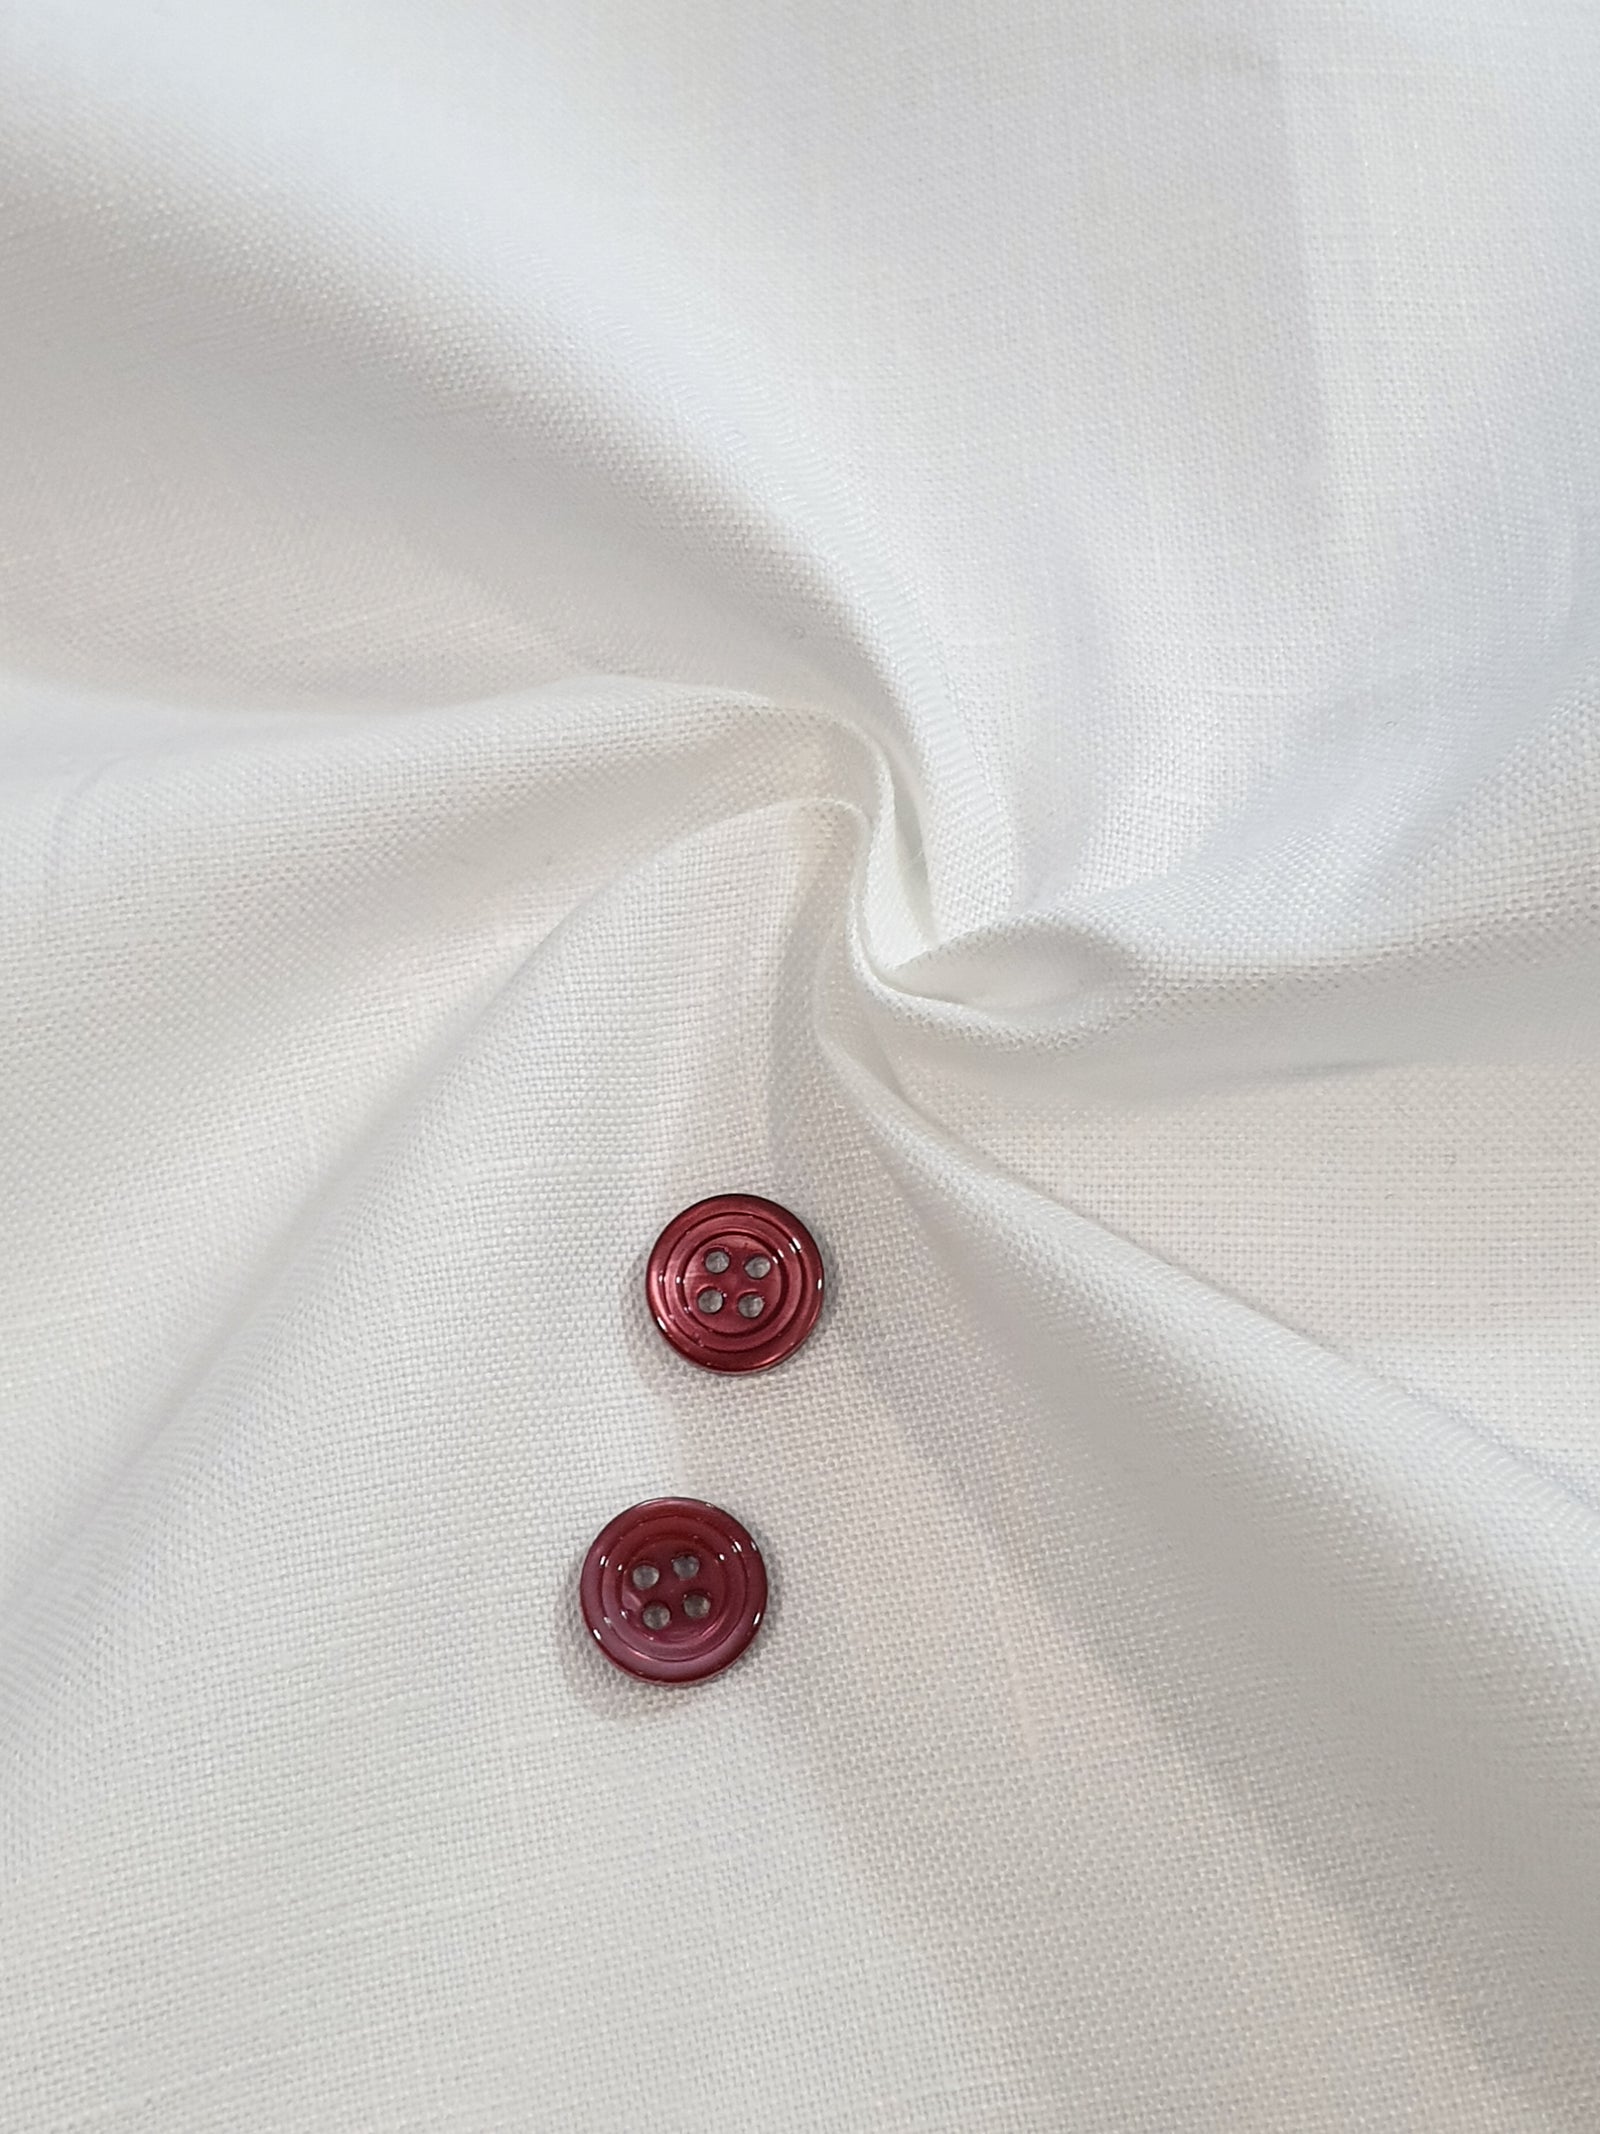 950.050 Off White Irish Linen Suiting Fabrics